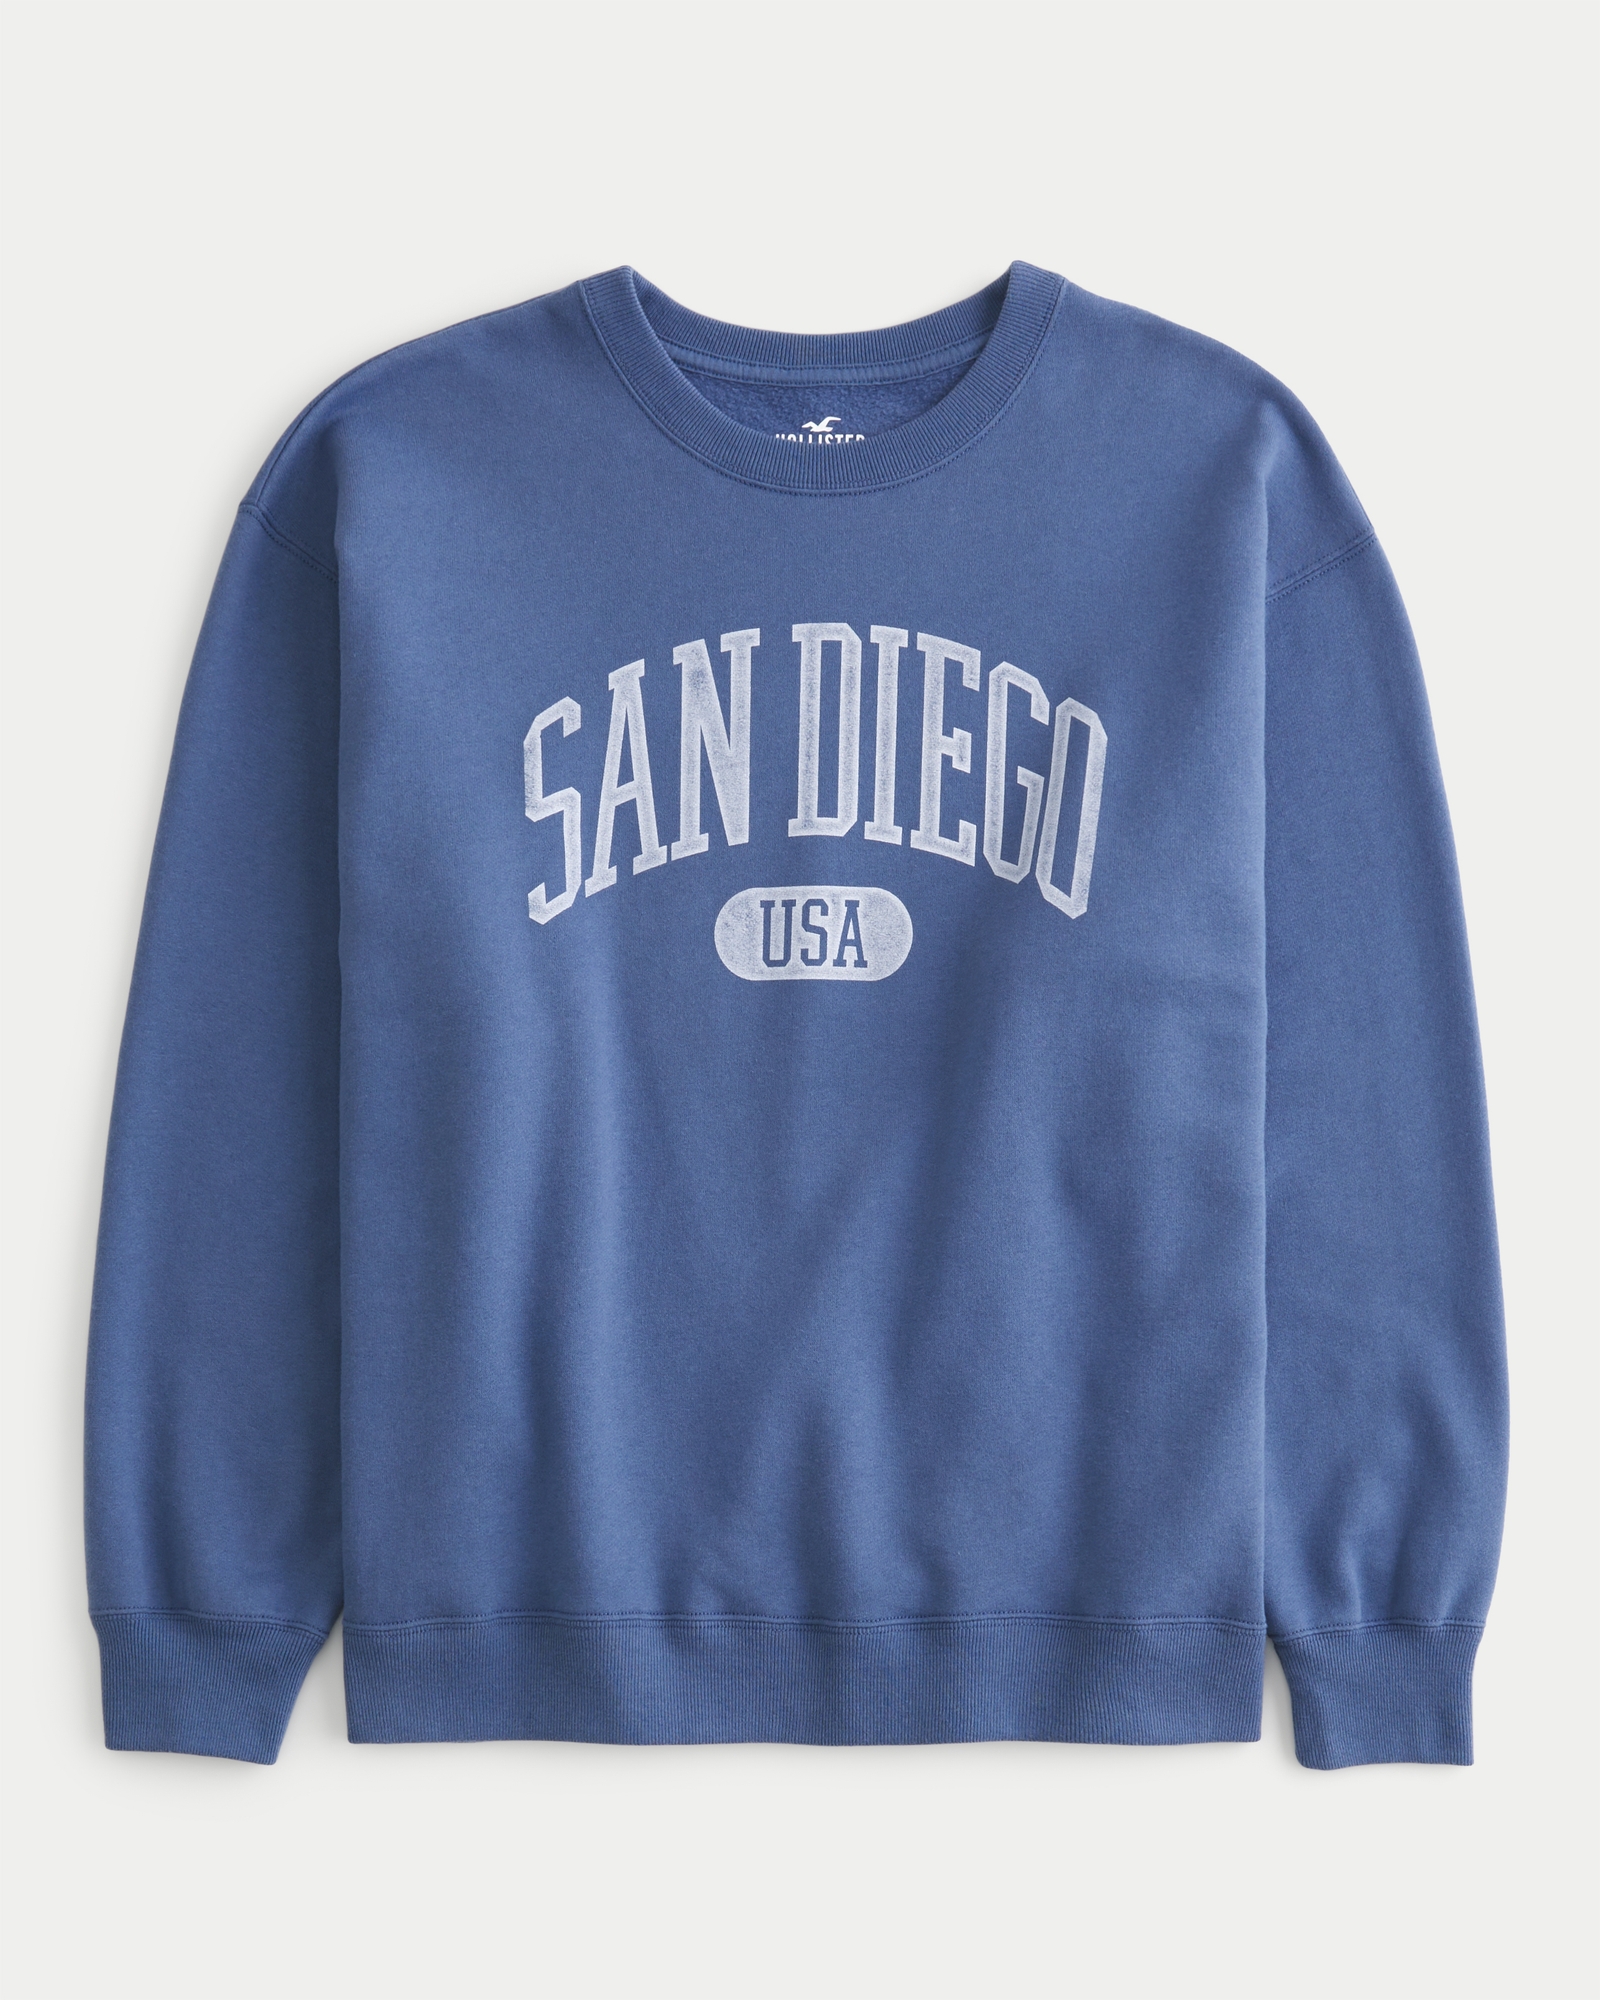 Women's Oversized San Diego Graphic Crew Sweatshirt